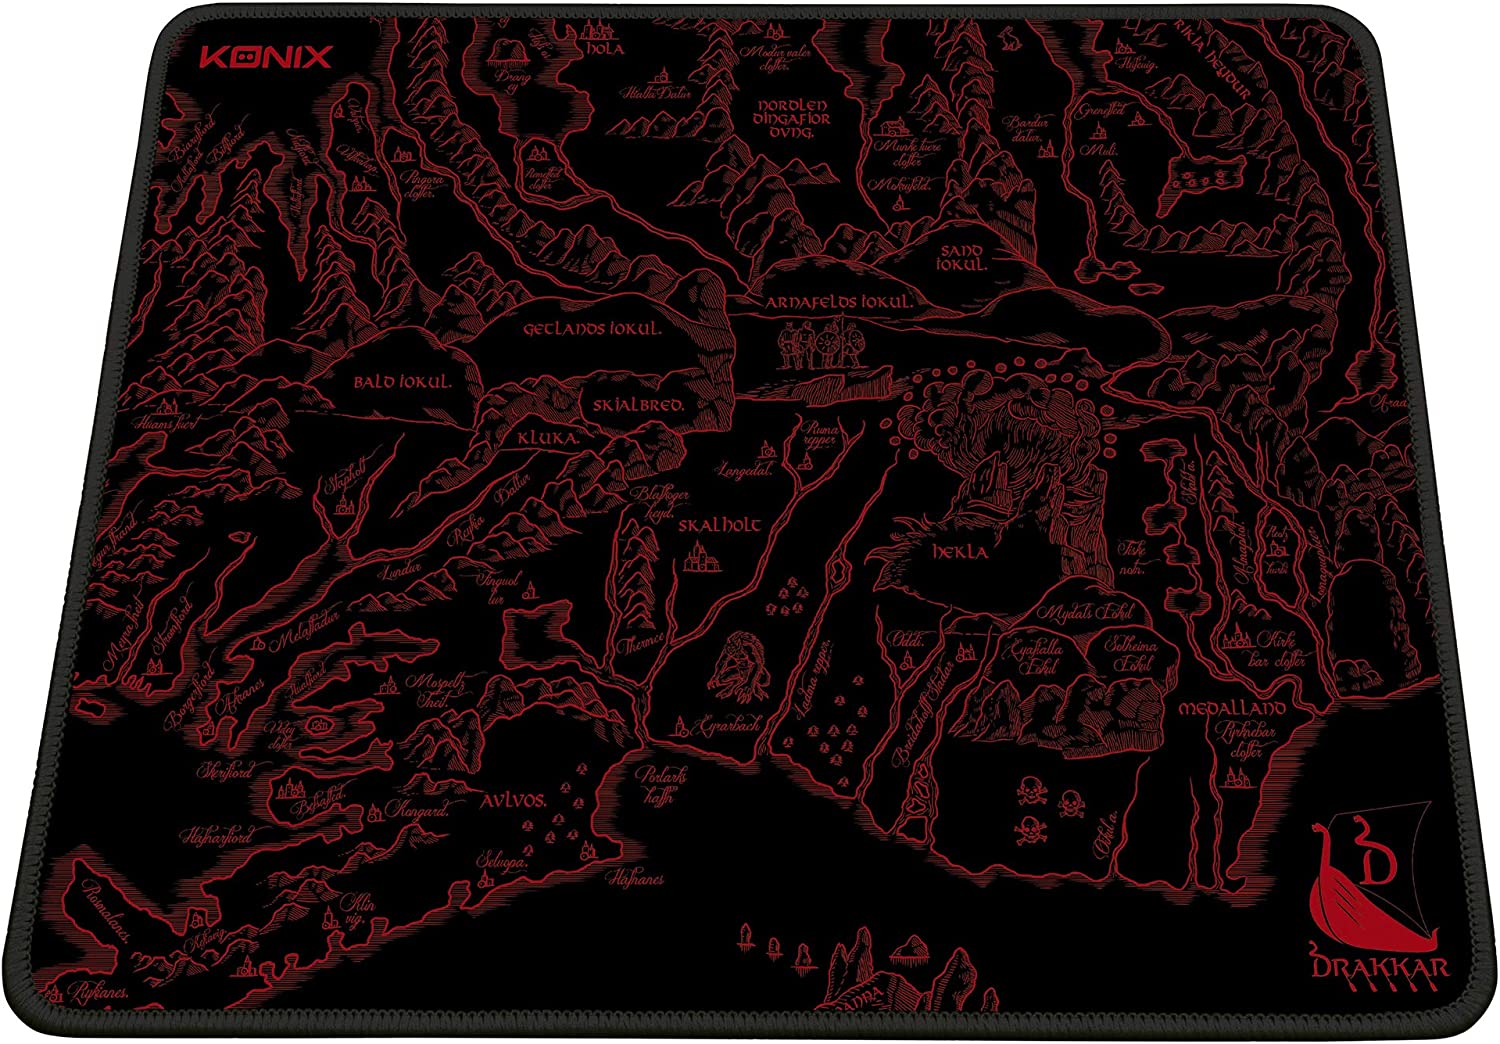 Tapis de jeu Konix Drakkar Medalland - Bords renforcés - Antidérapant - Taille 320x270x3mm